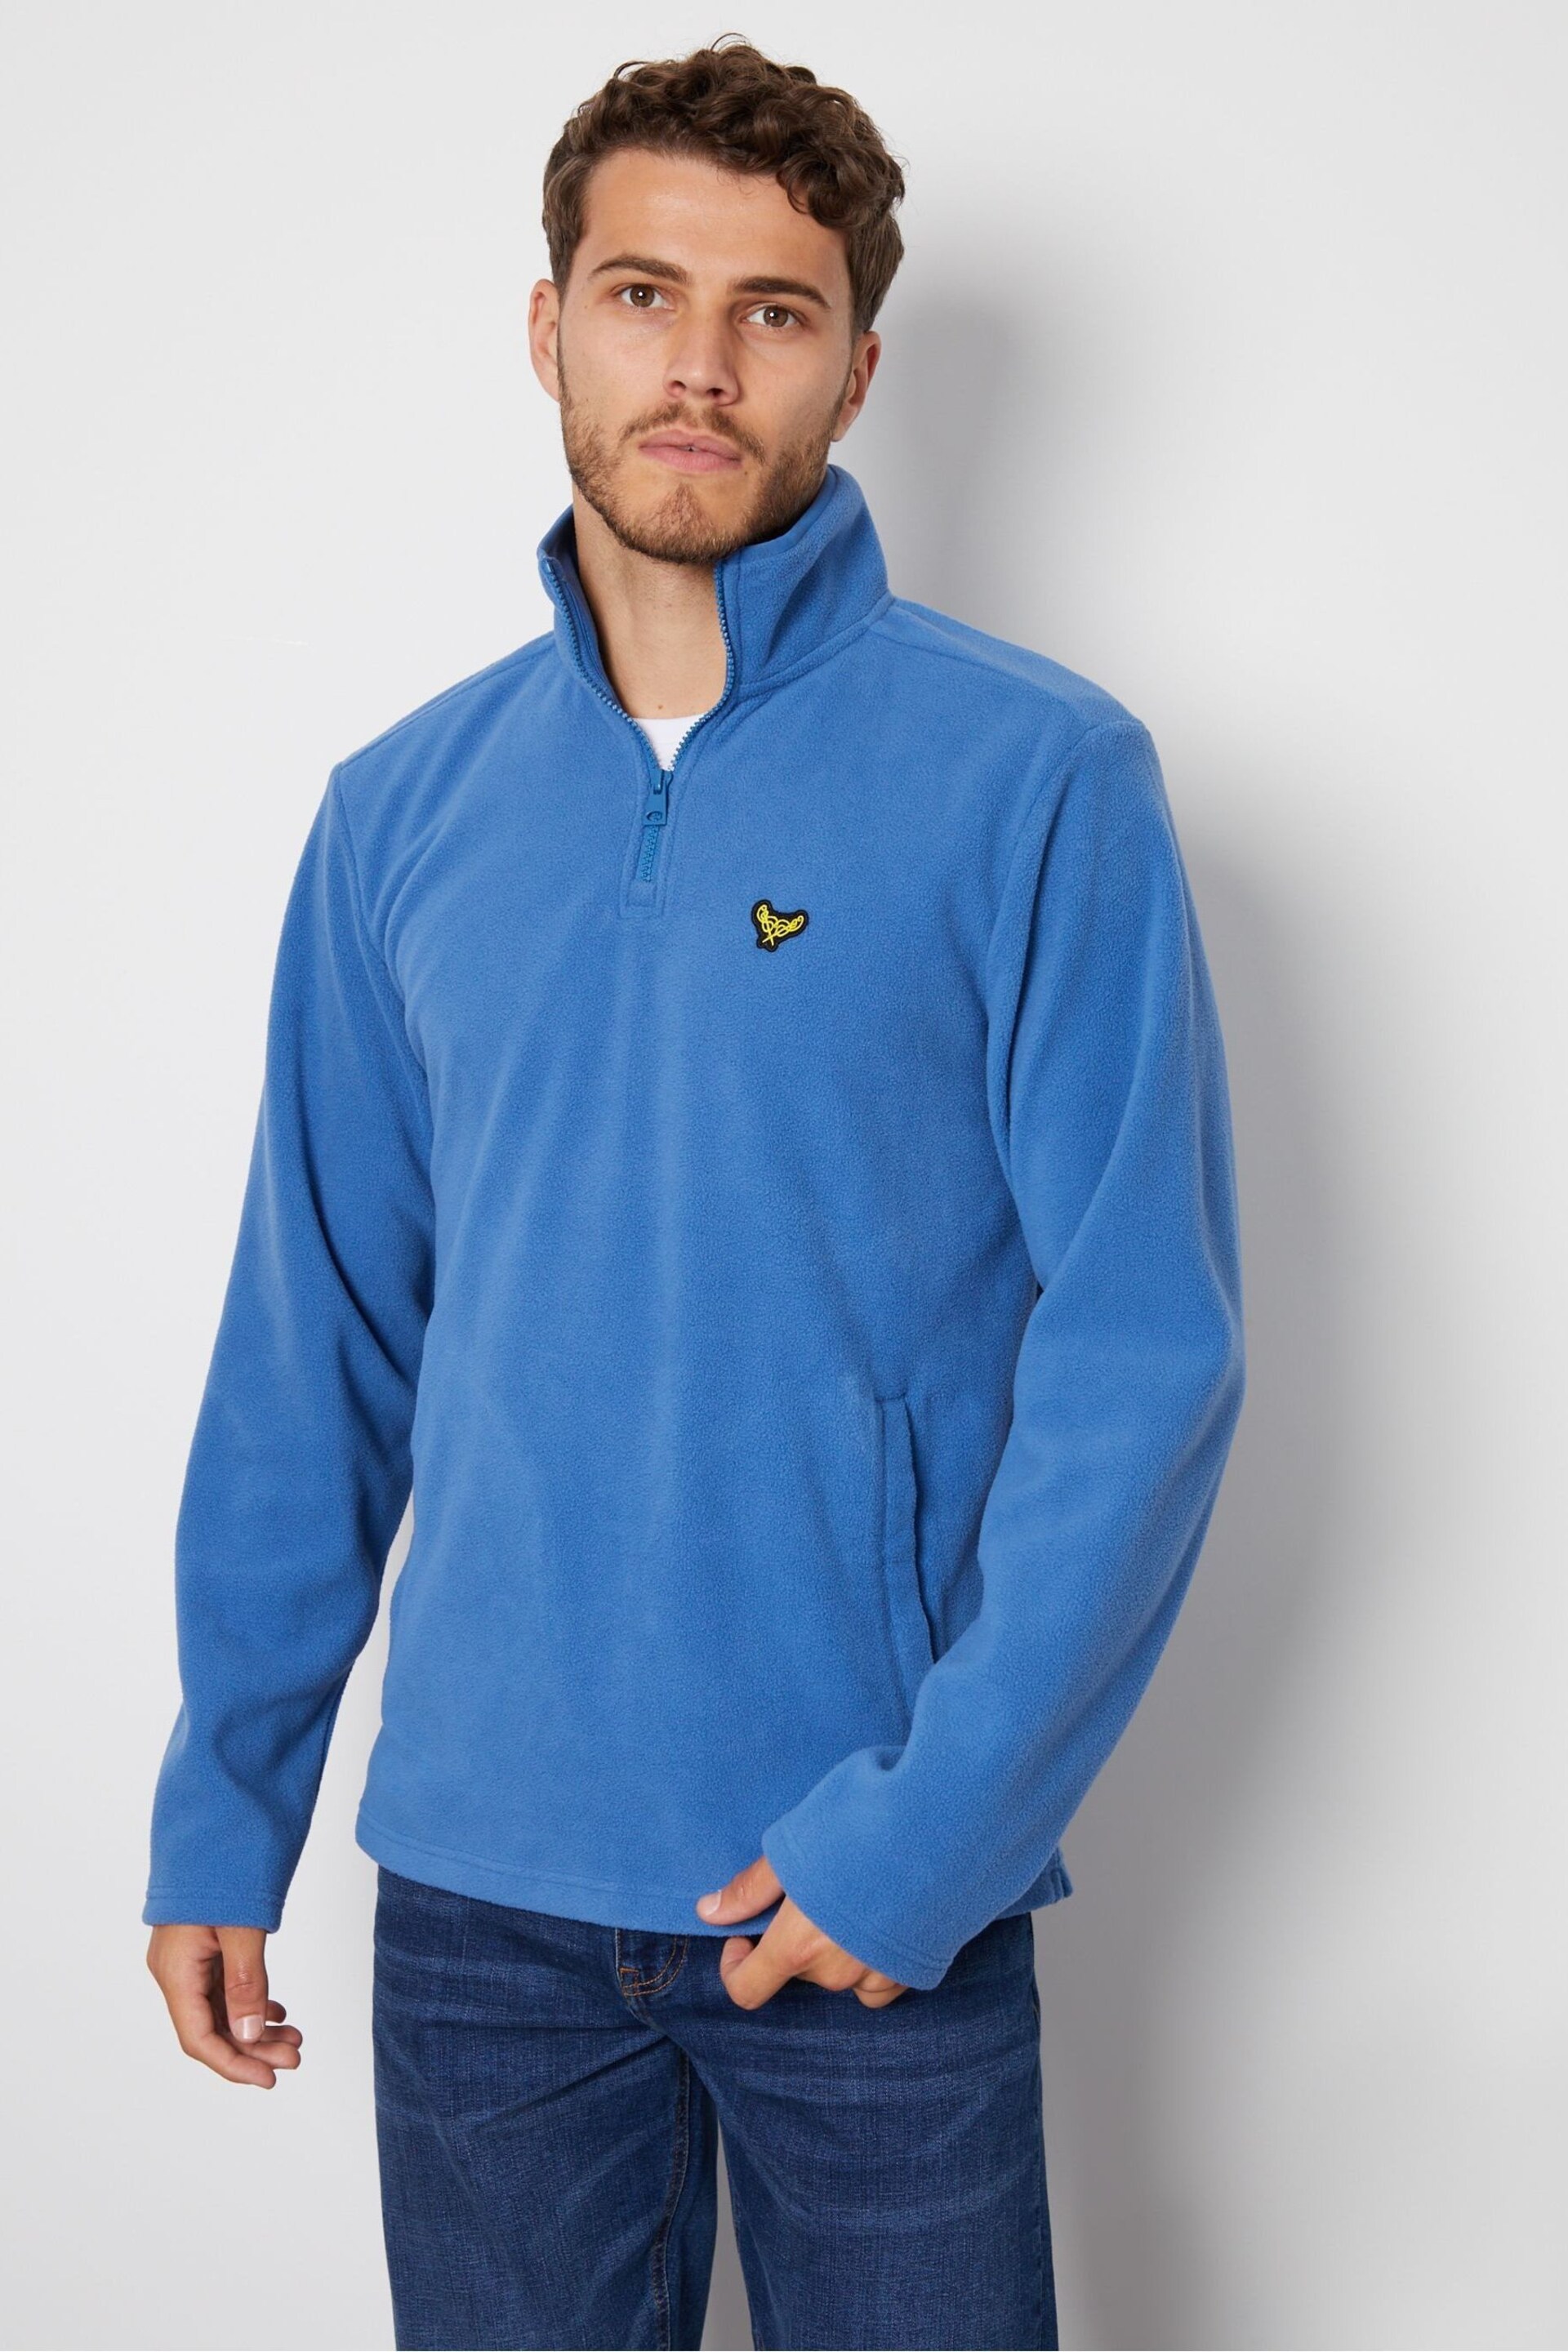 Threadbare Light Blue 1/4 Zip Fleece Sweatshirt - Image 2 of 4